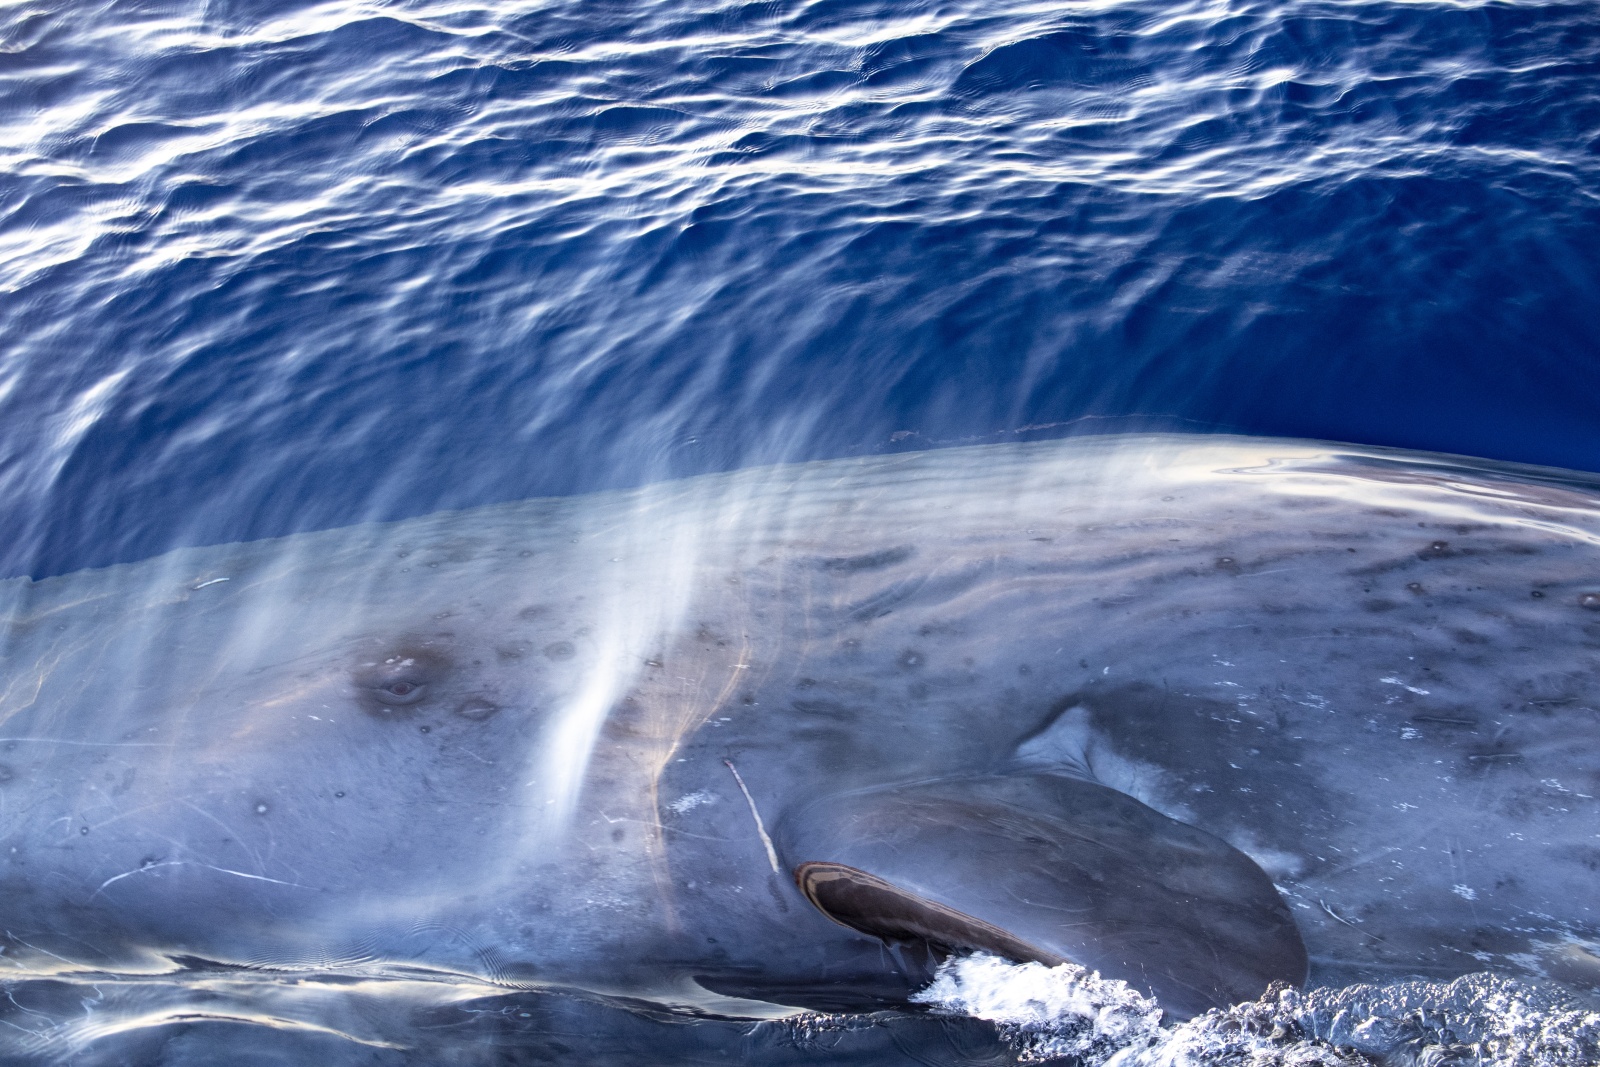 Elia the sperm whale - August 2020, Genoa, Italy